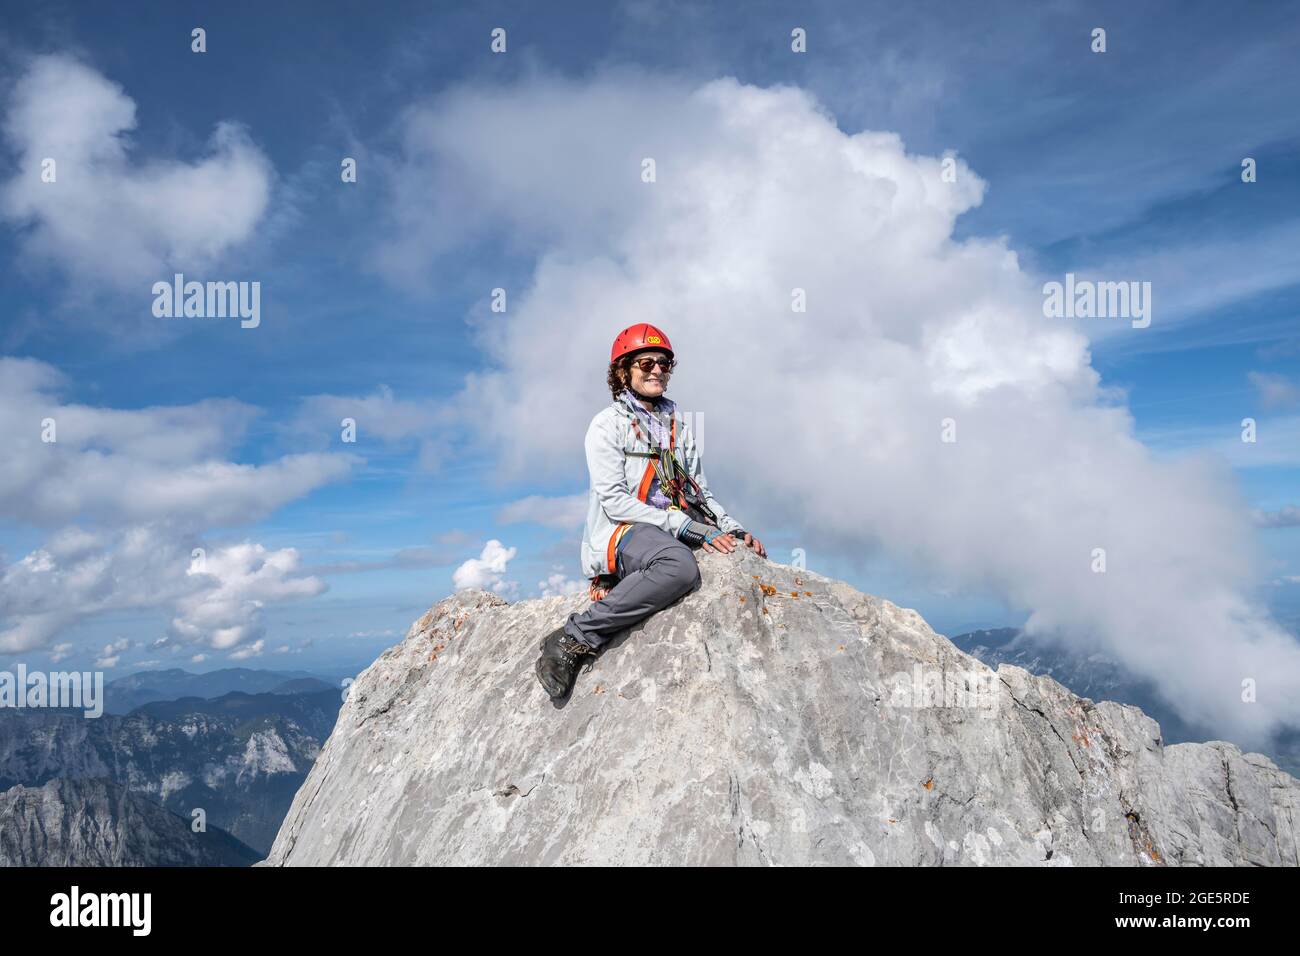 Hiker with helmet sitting on rocks, Watzmann middle peak, hiking trail to the Watzmann, Watzmann crossing, Berchtesgaden, Bavaria, Germany Stock Photo